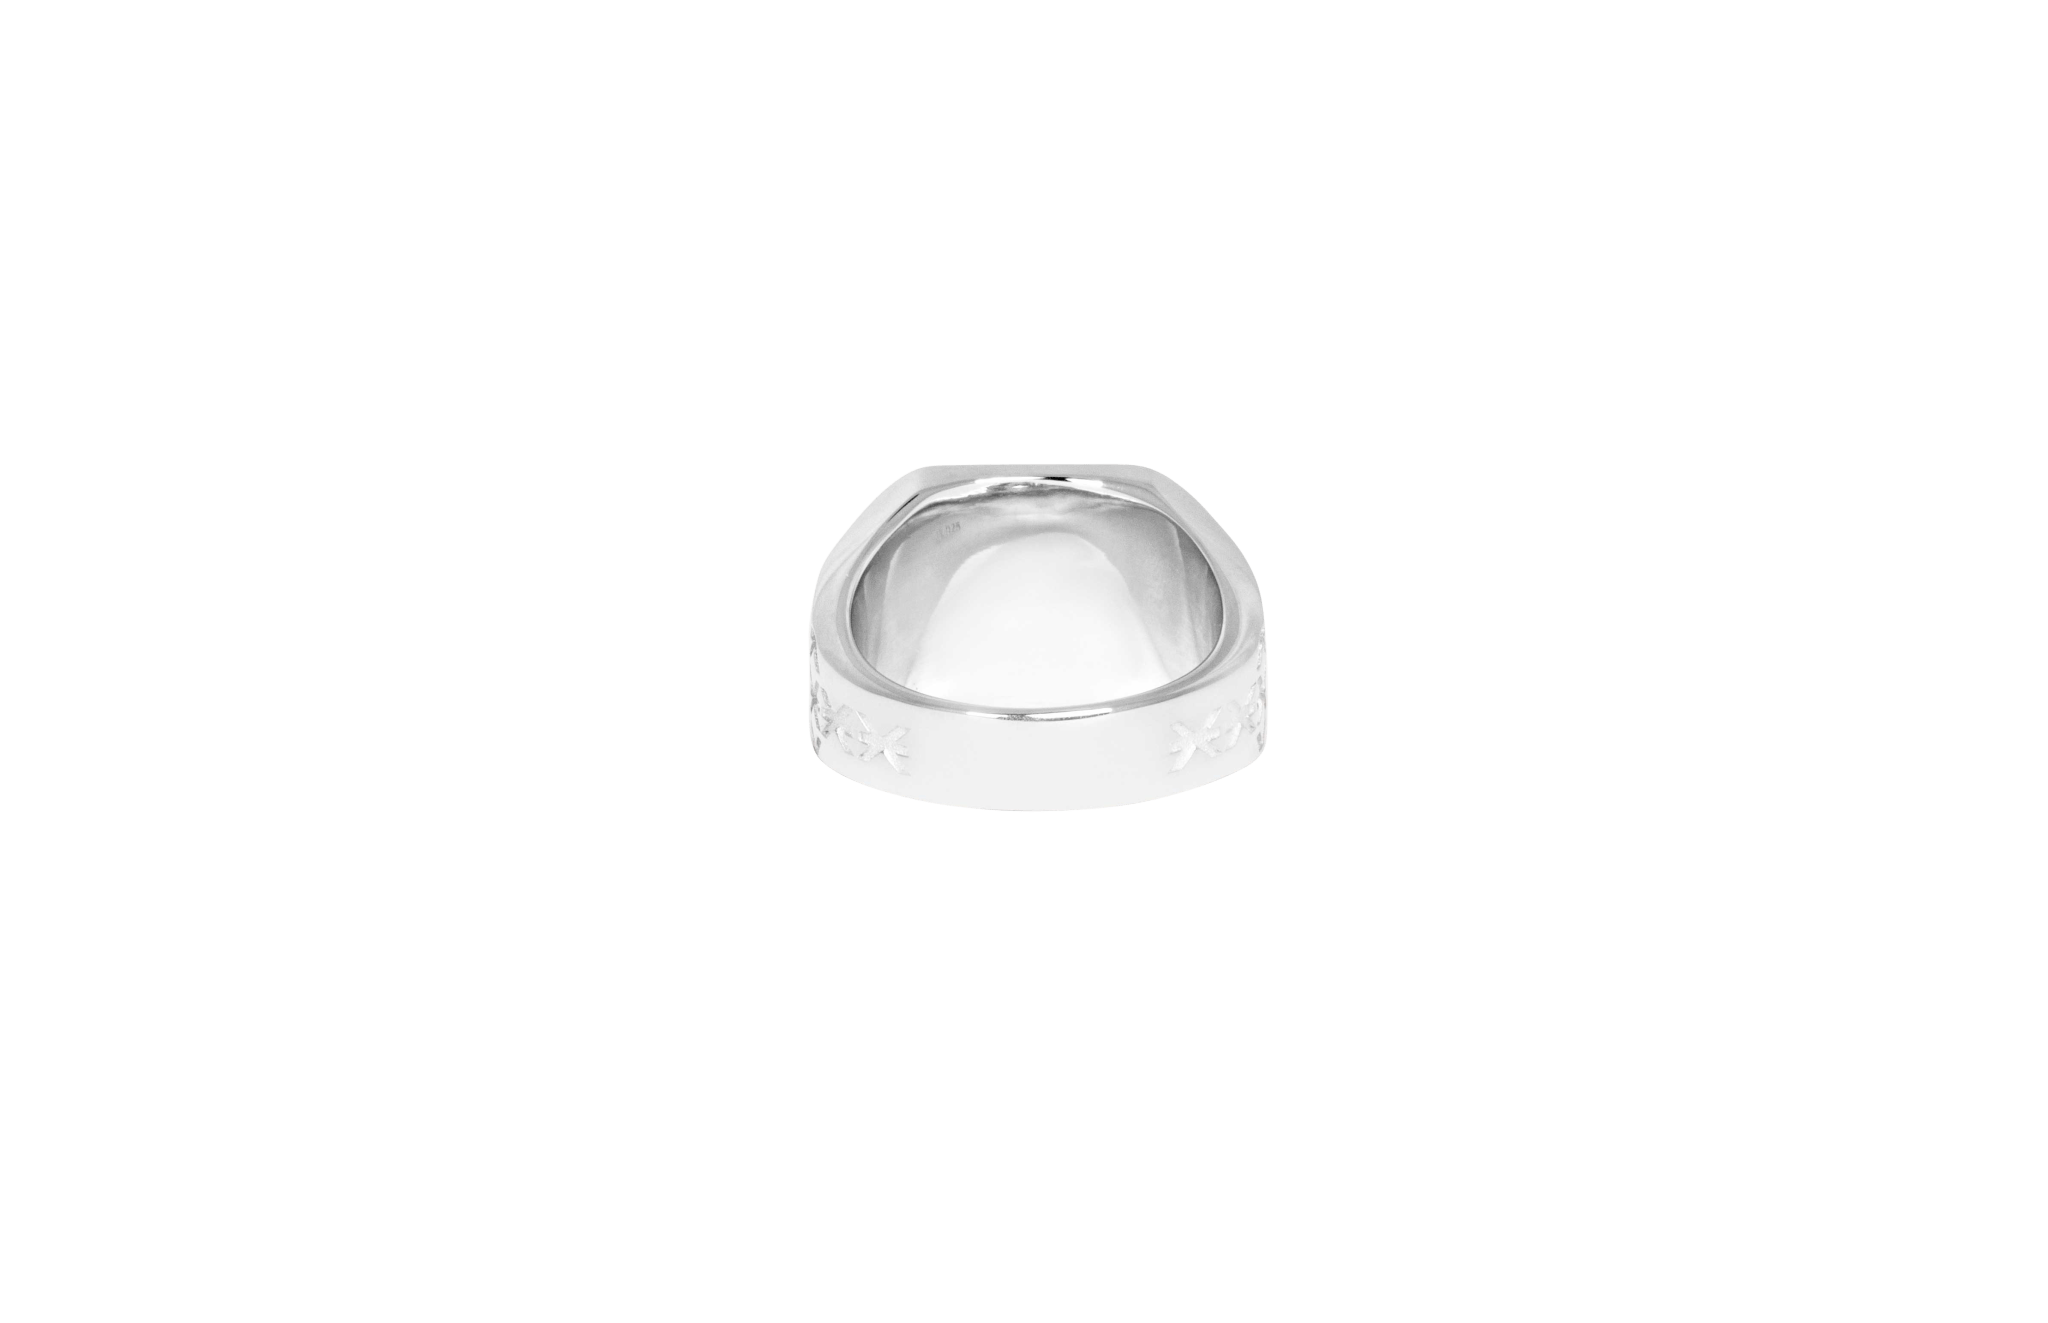 IX Octagon Logo Signet Ring Silver